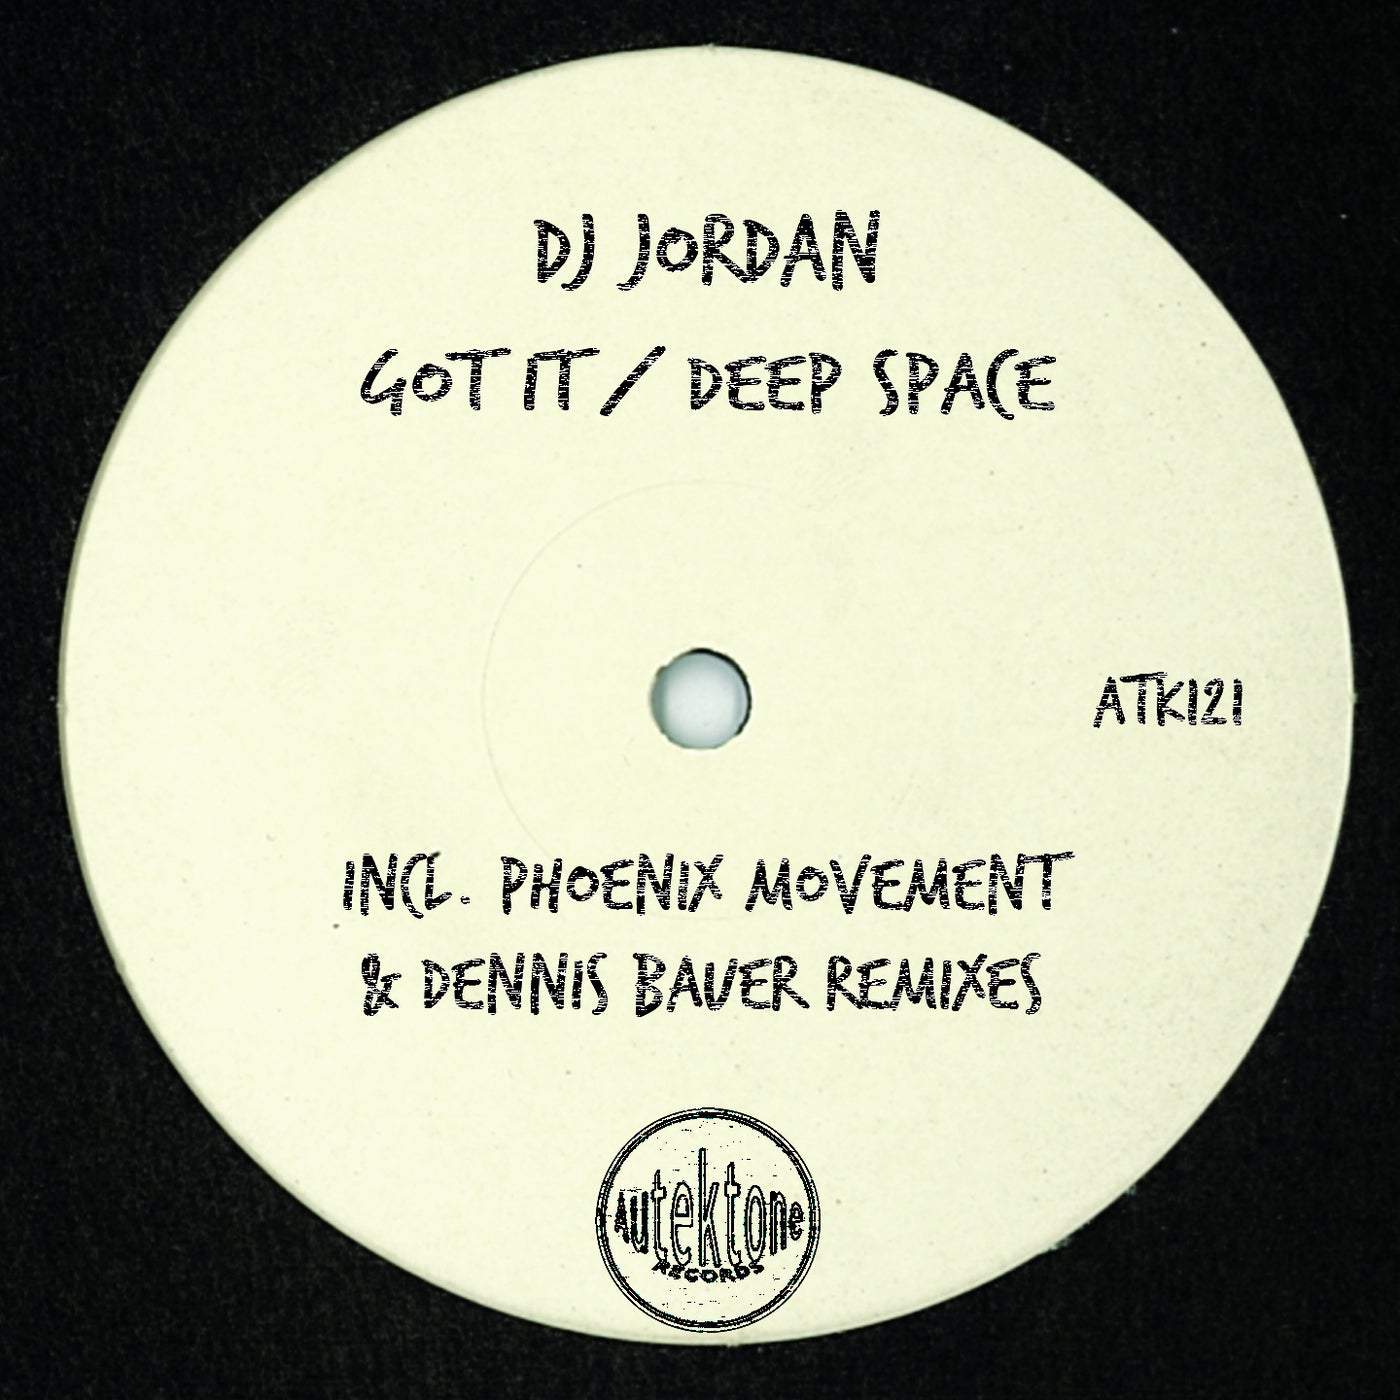 image cover: DJ Jordan - Got It / Deep Space / ATK121